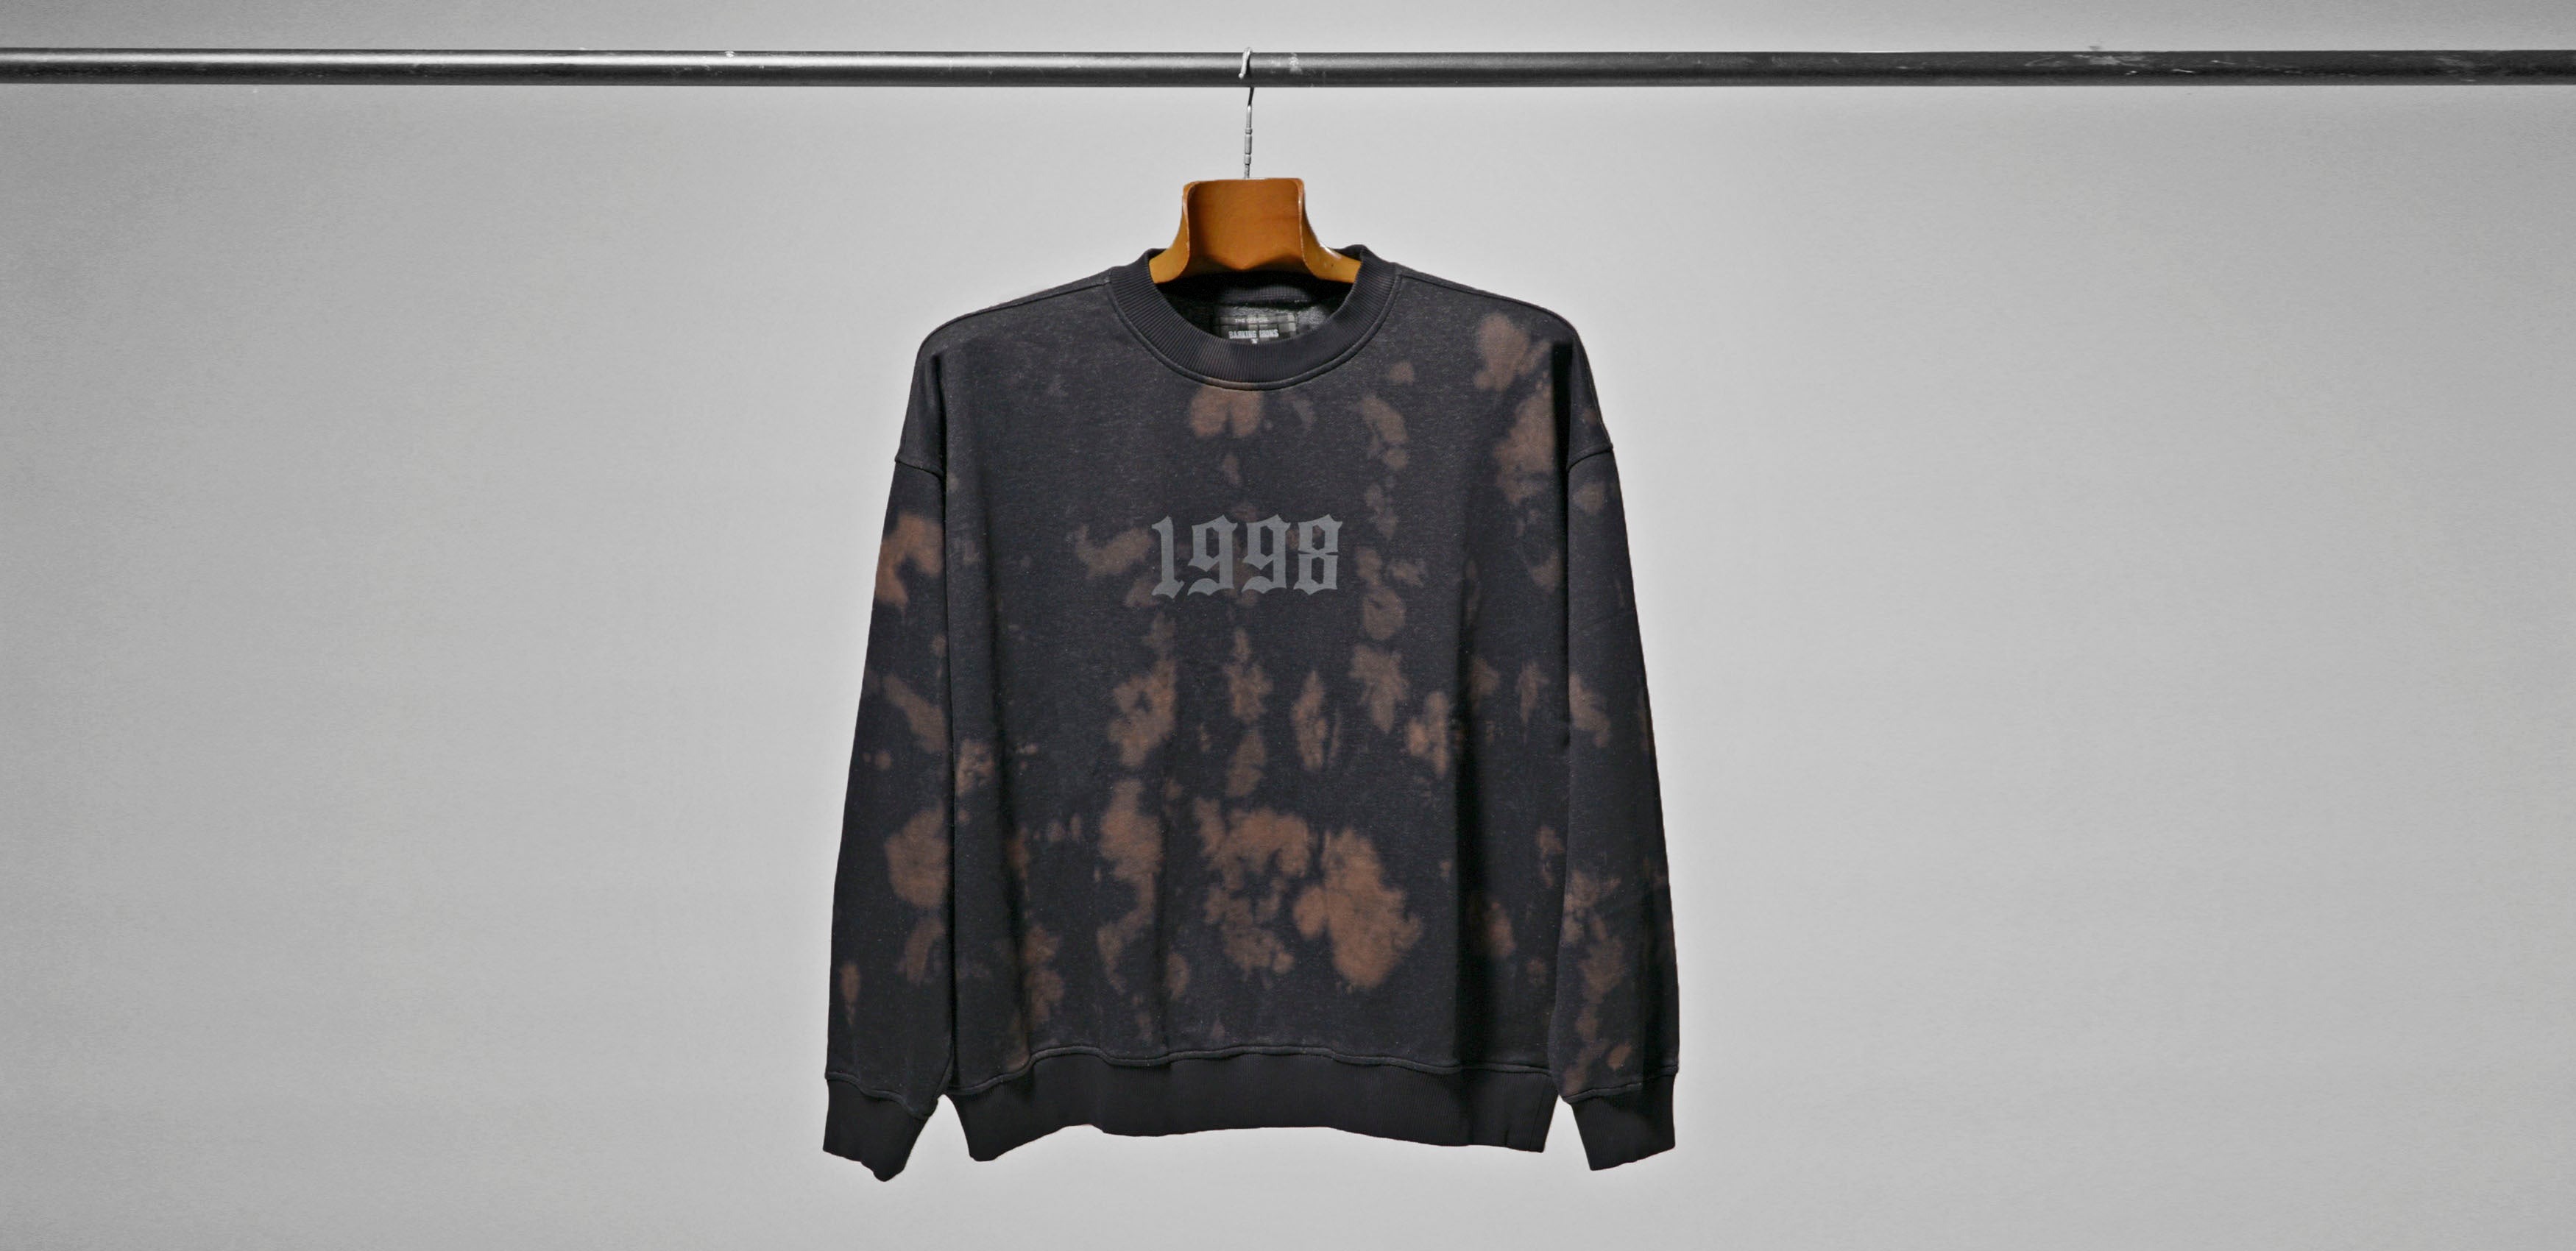 Korn 1998 Crewneck Sweatshirt (Bleached Black)